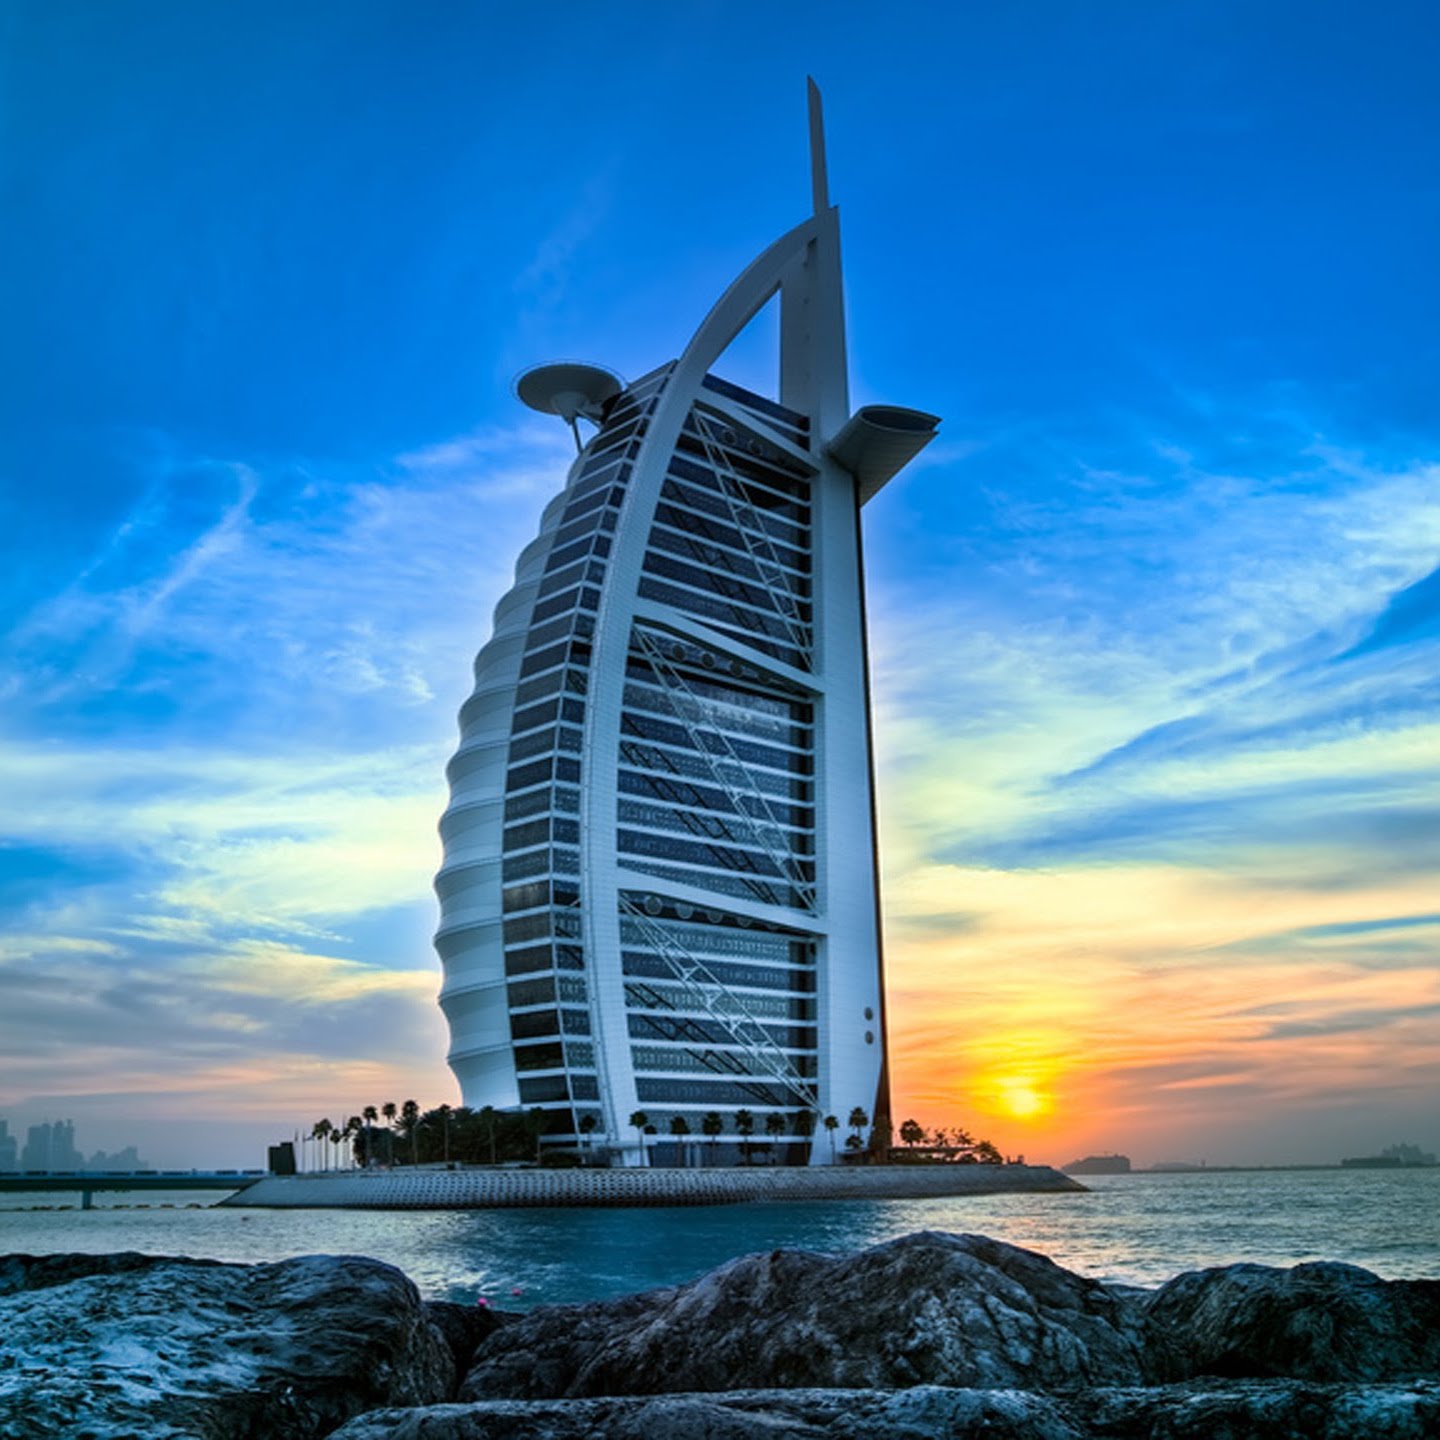 explore the amazing Burj Al Arab with vip suite access